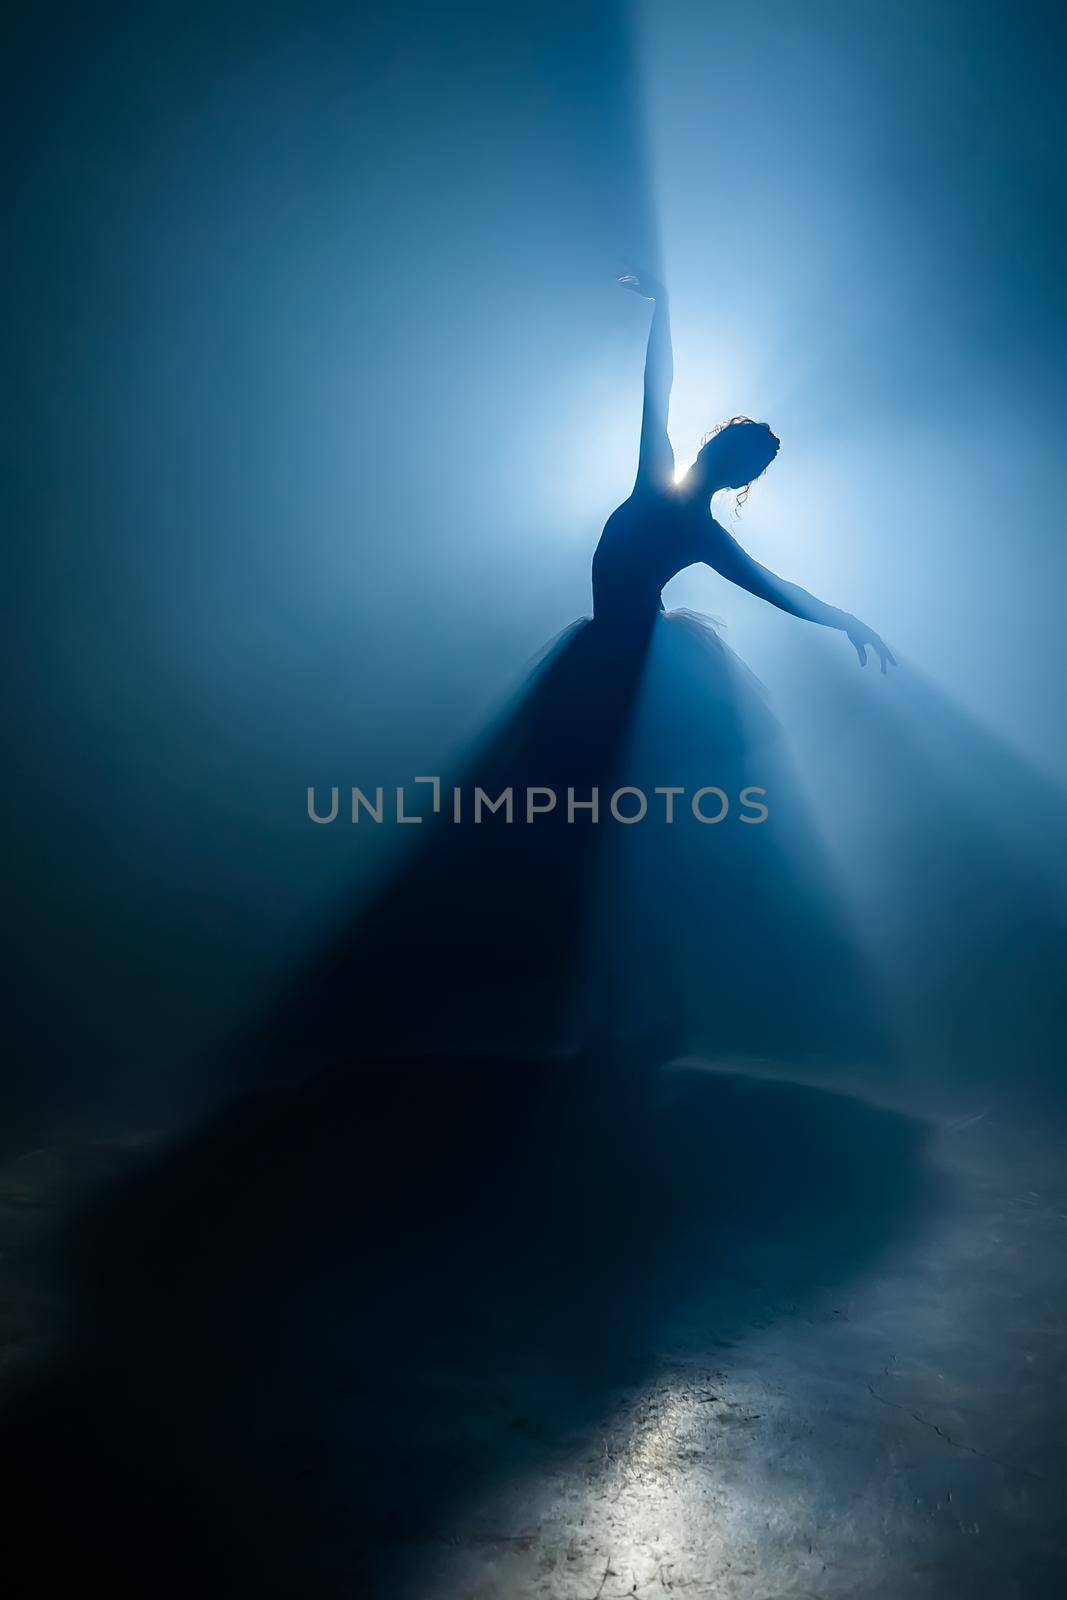 Ballet dancer in tutu performing, dancing on stage. Ballerina practices on floor in dark studio with smoke. Neon light. High quality photo